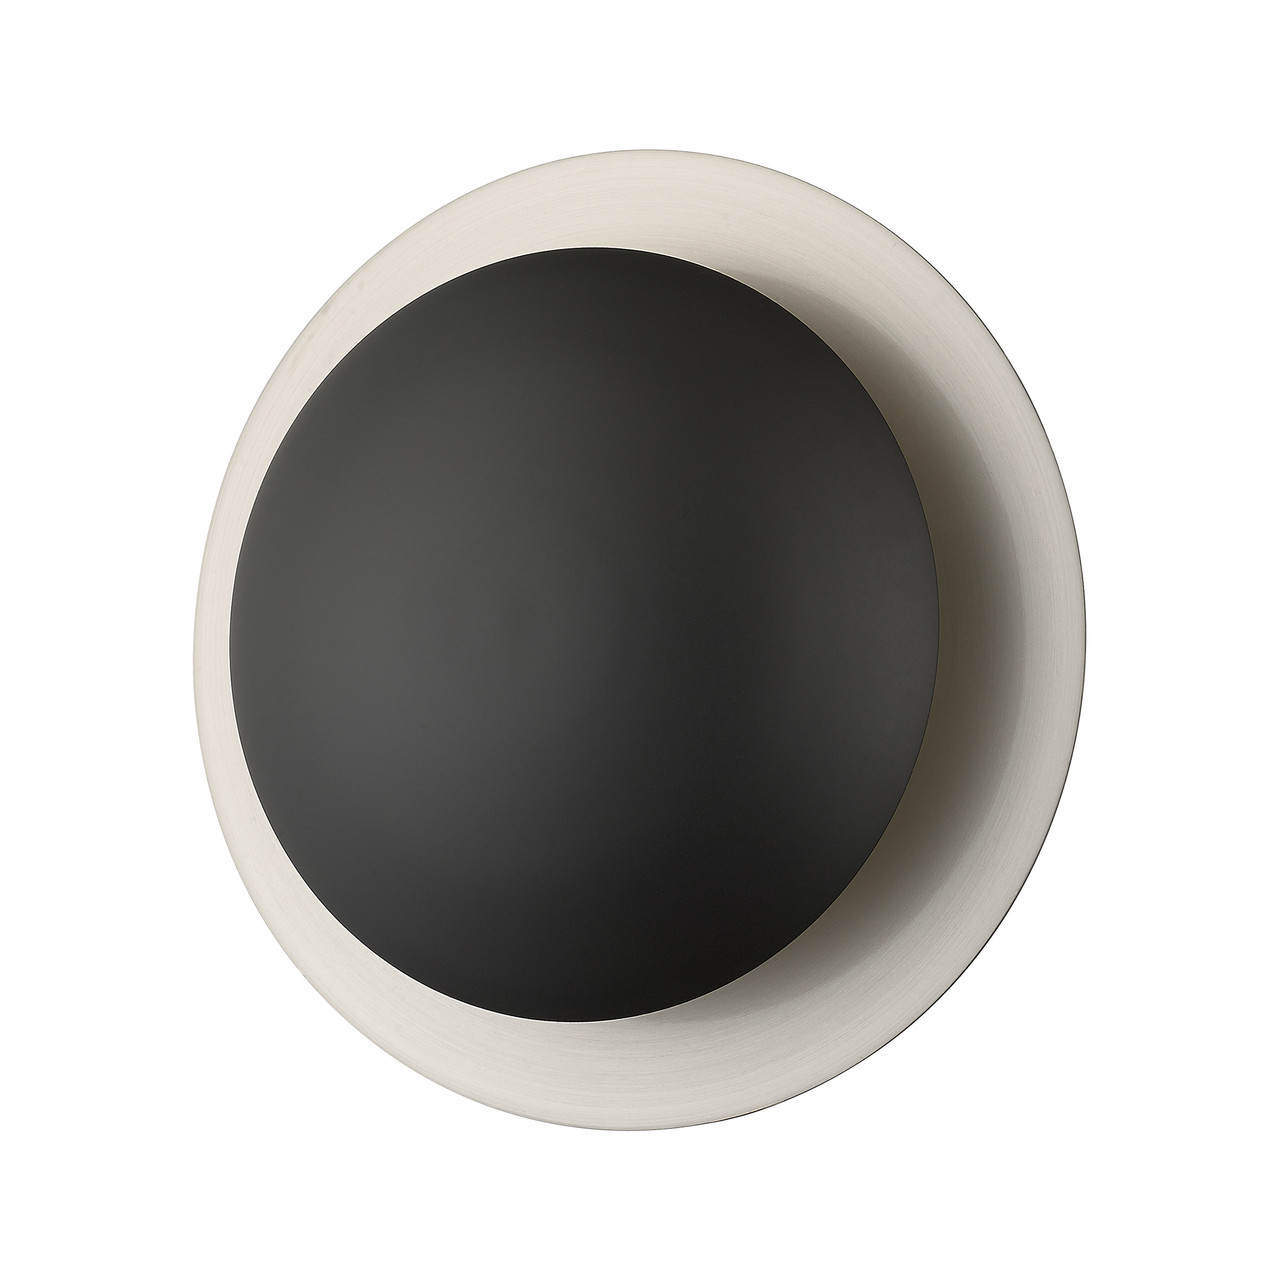 LIVEX LIGHTING 56571-04 2 Light Black Medium Semi-Flush/ Wall Sconce with Brushed Nickel Reflector Backplate